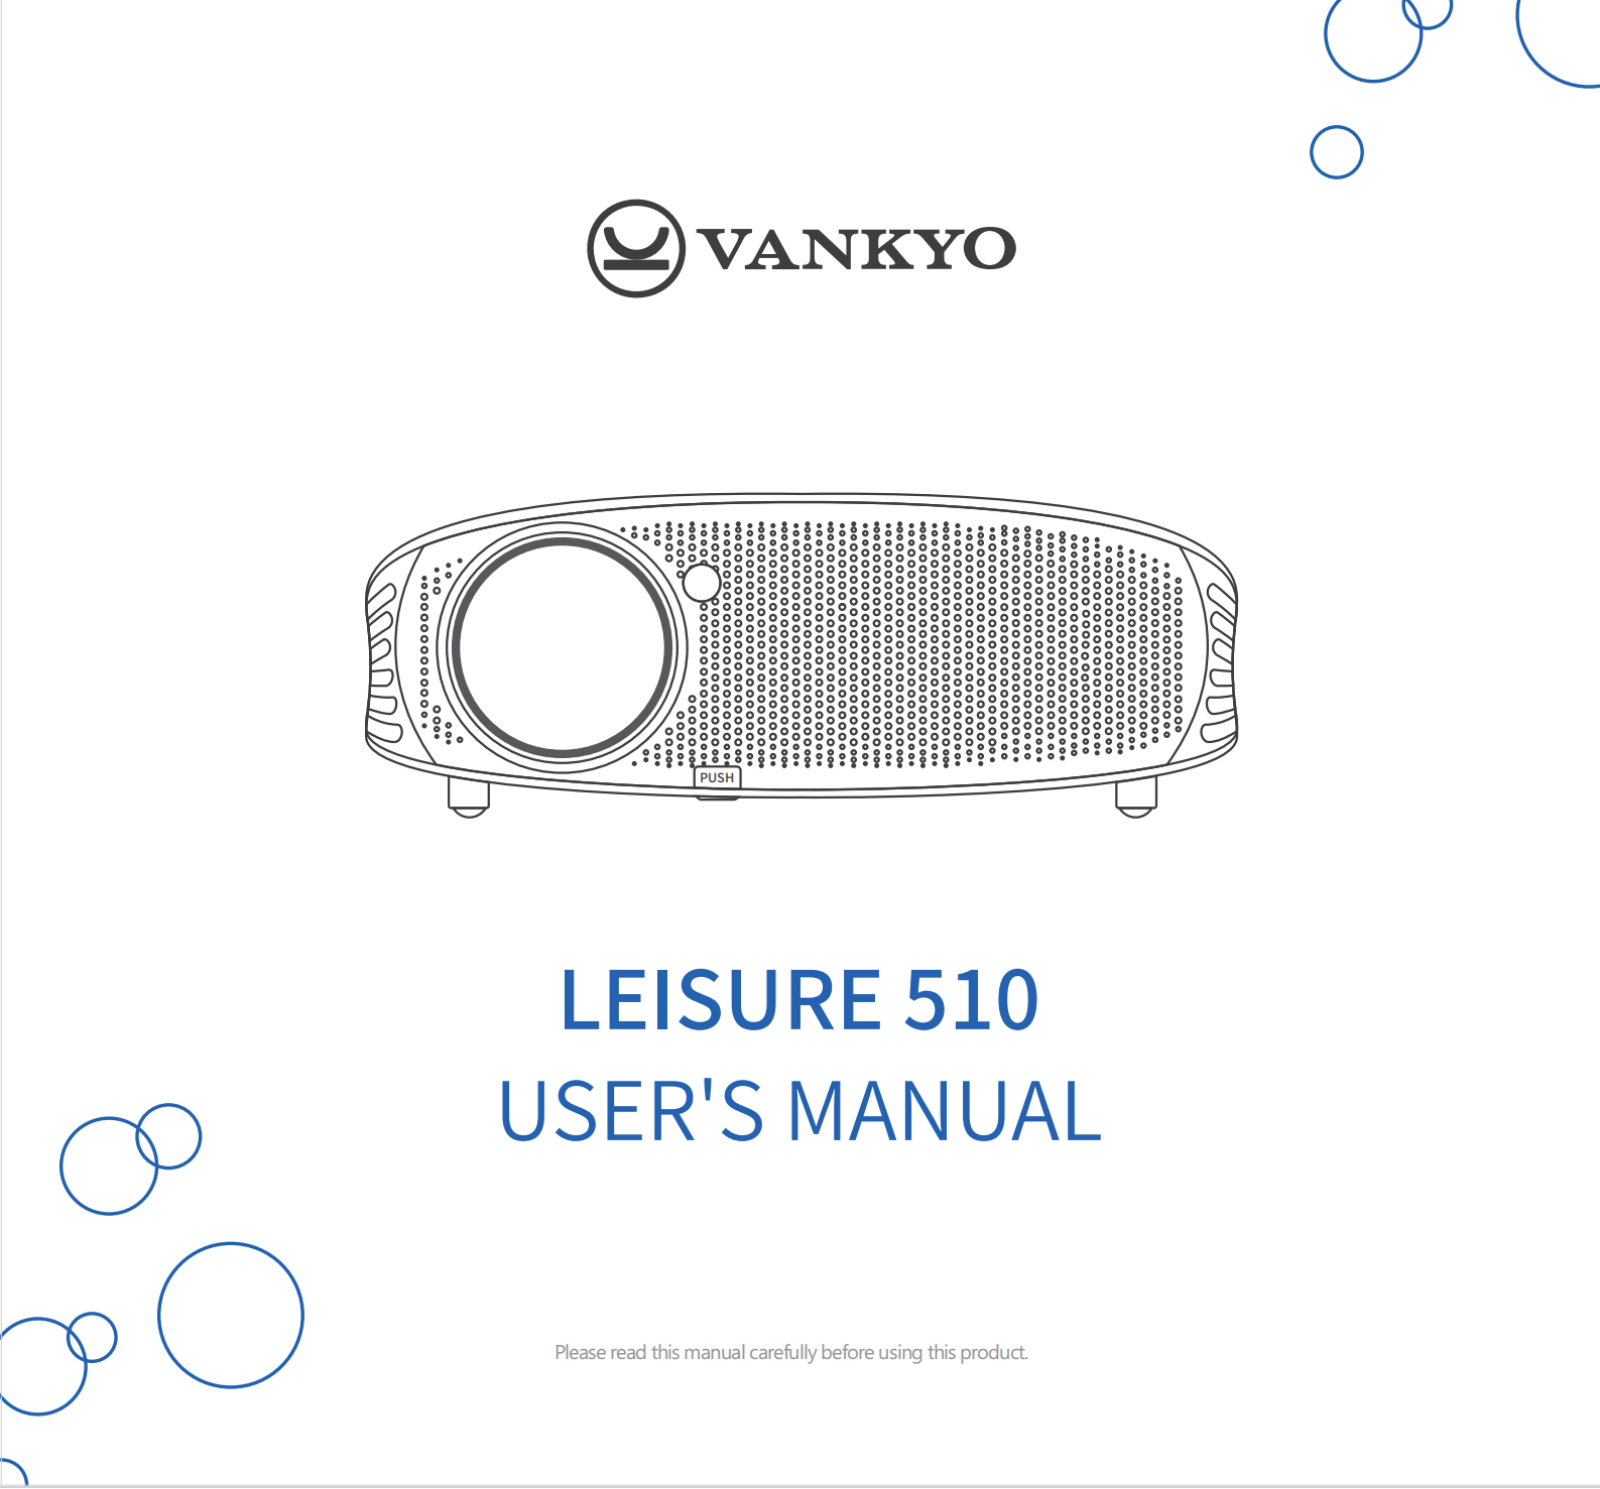 Vankyo Leisure 510 User Manual